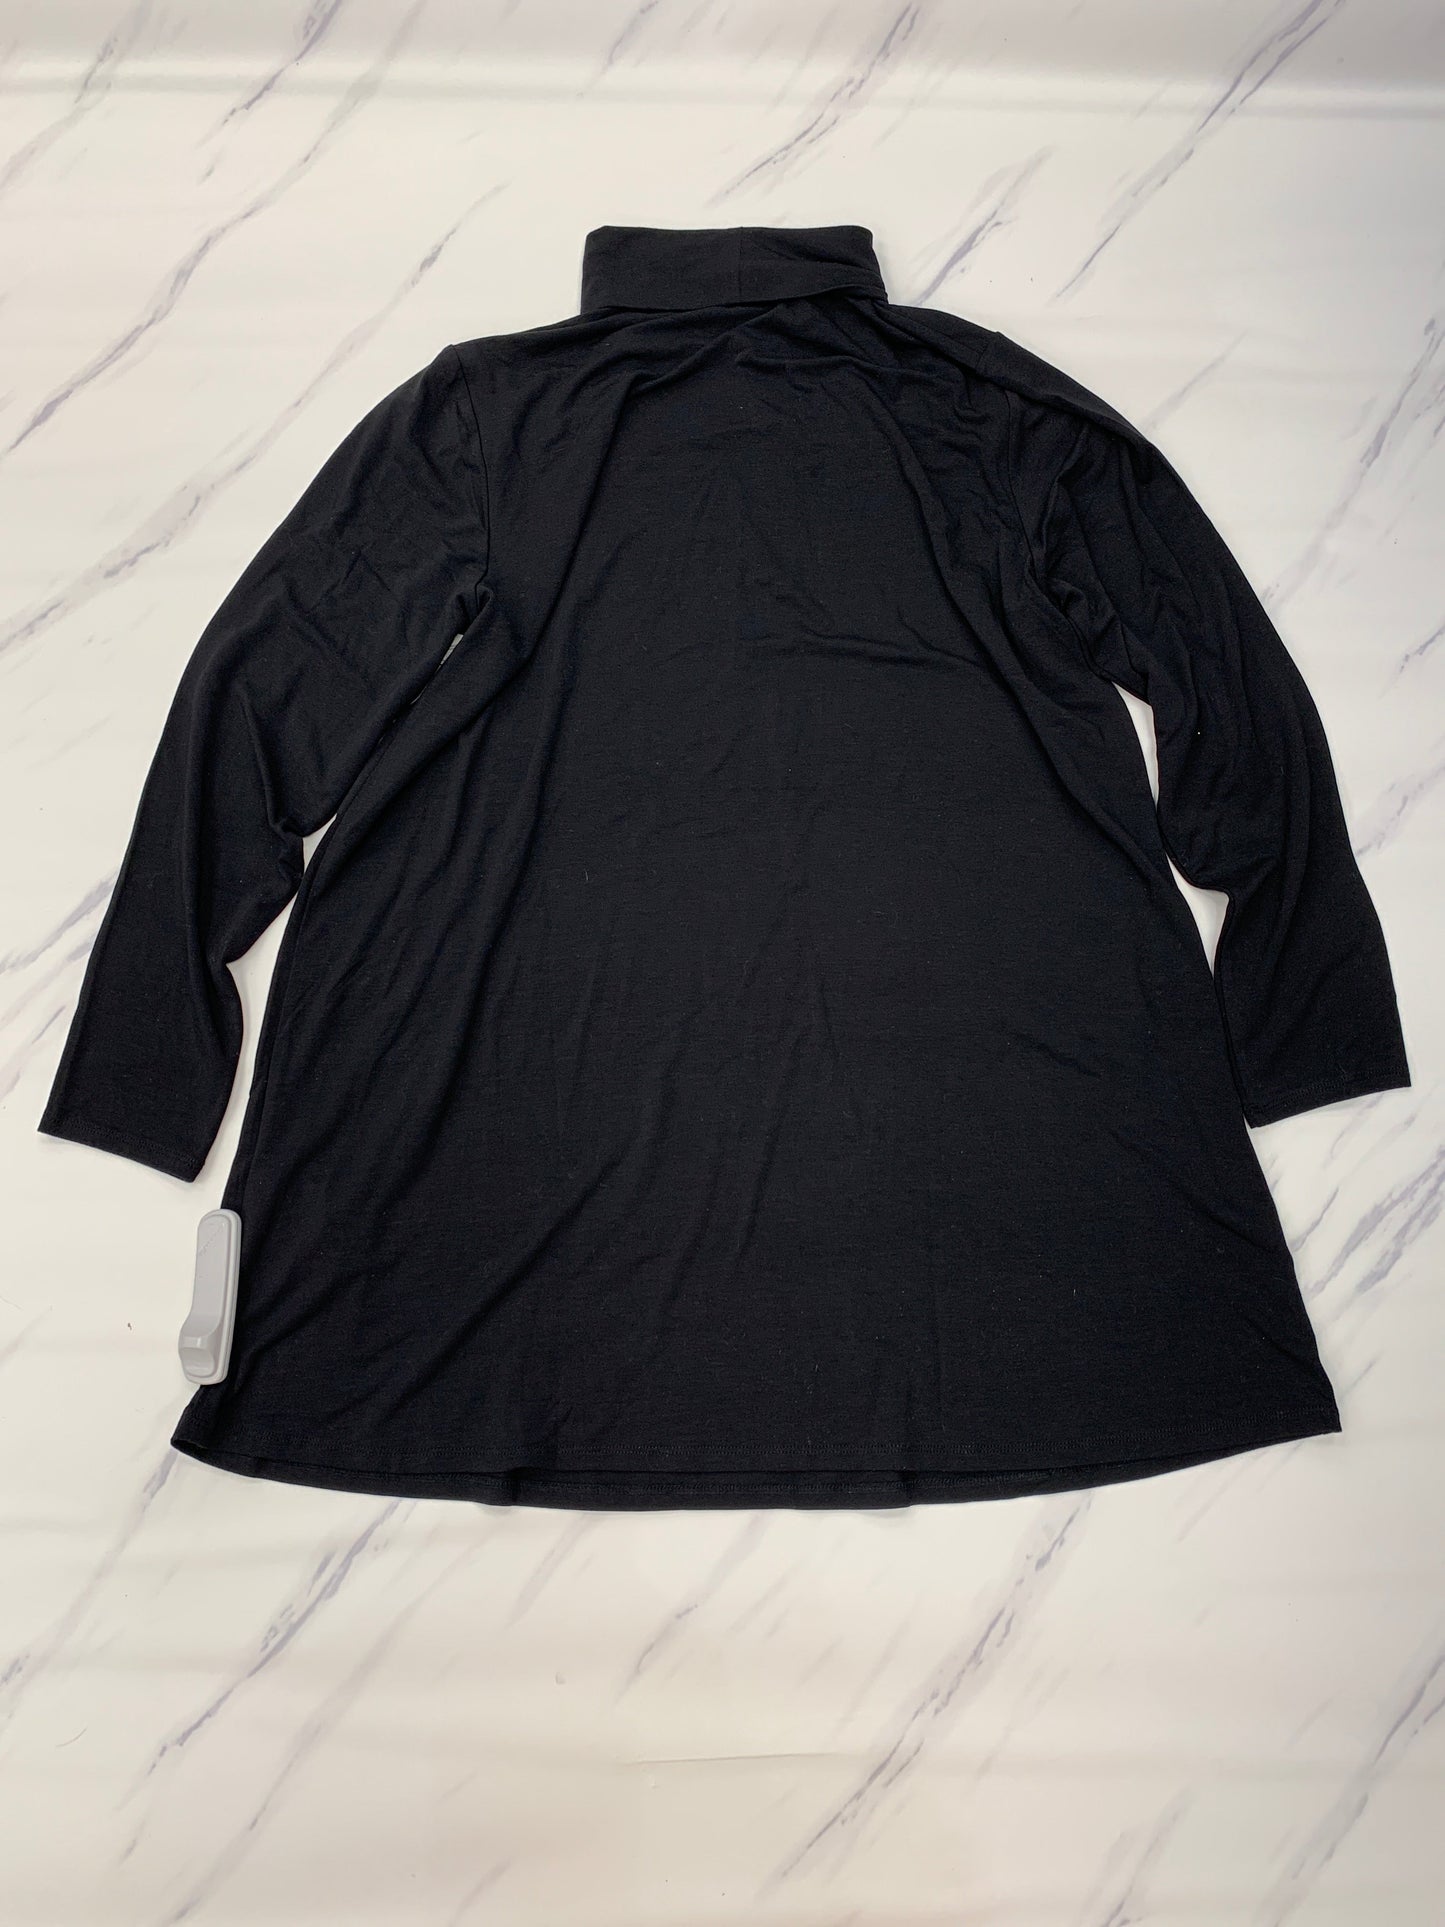 Black Top Long Sleeve Eileen Fisher, Size L